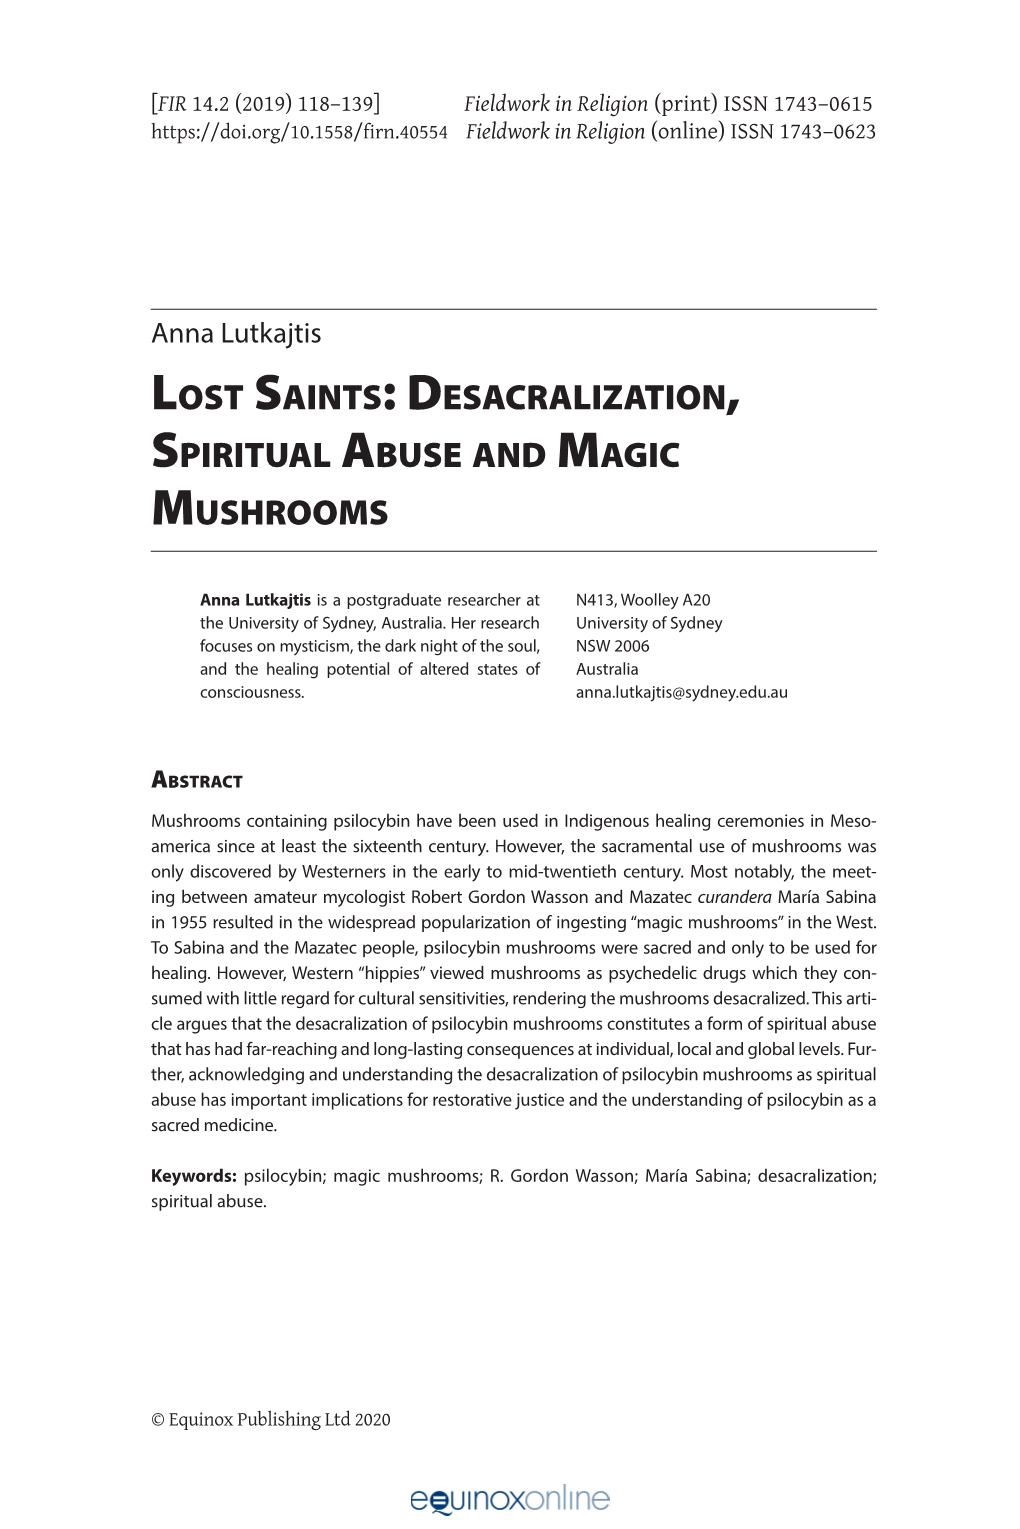 Desacralization, Spiritual Abuse and Magic Mushrooms